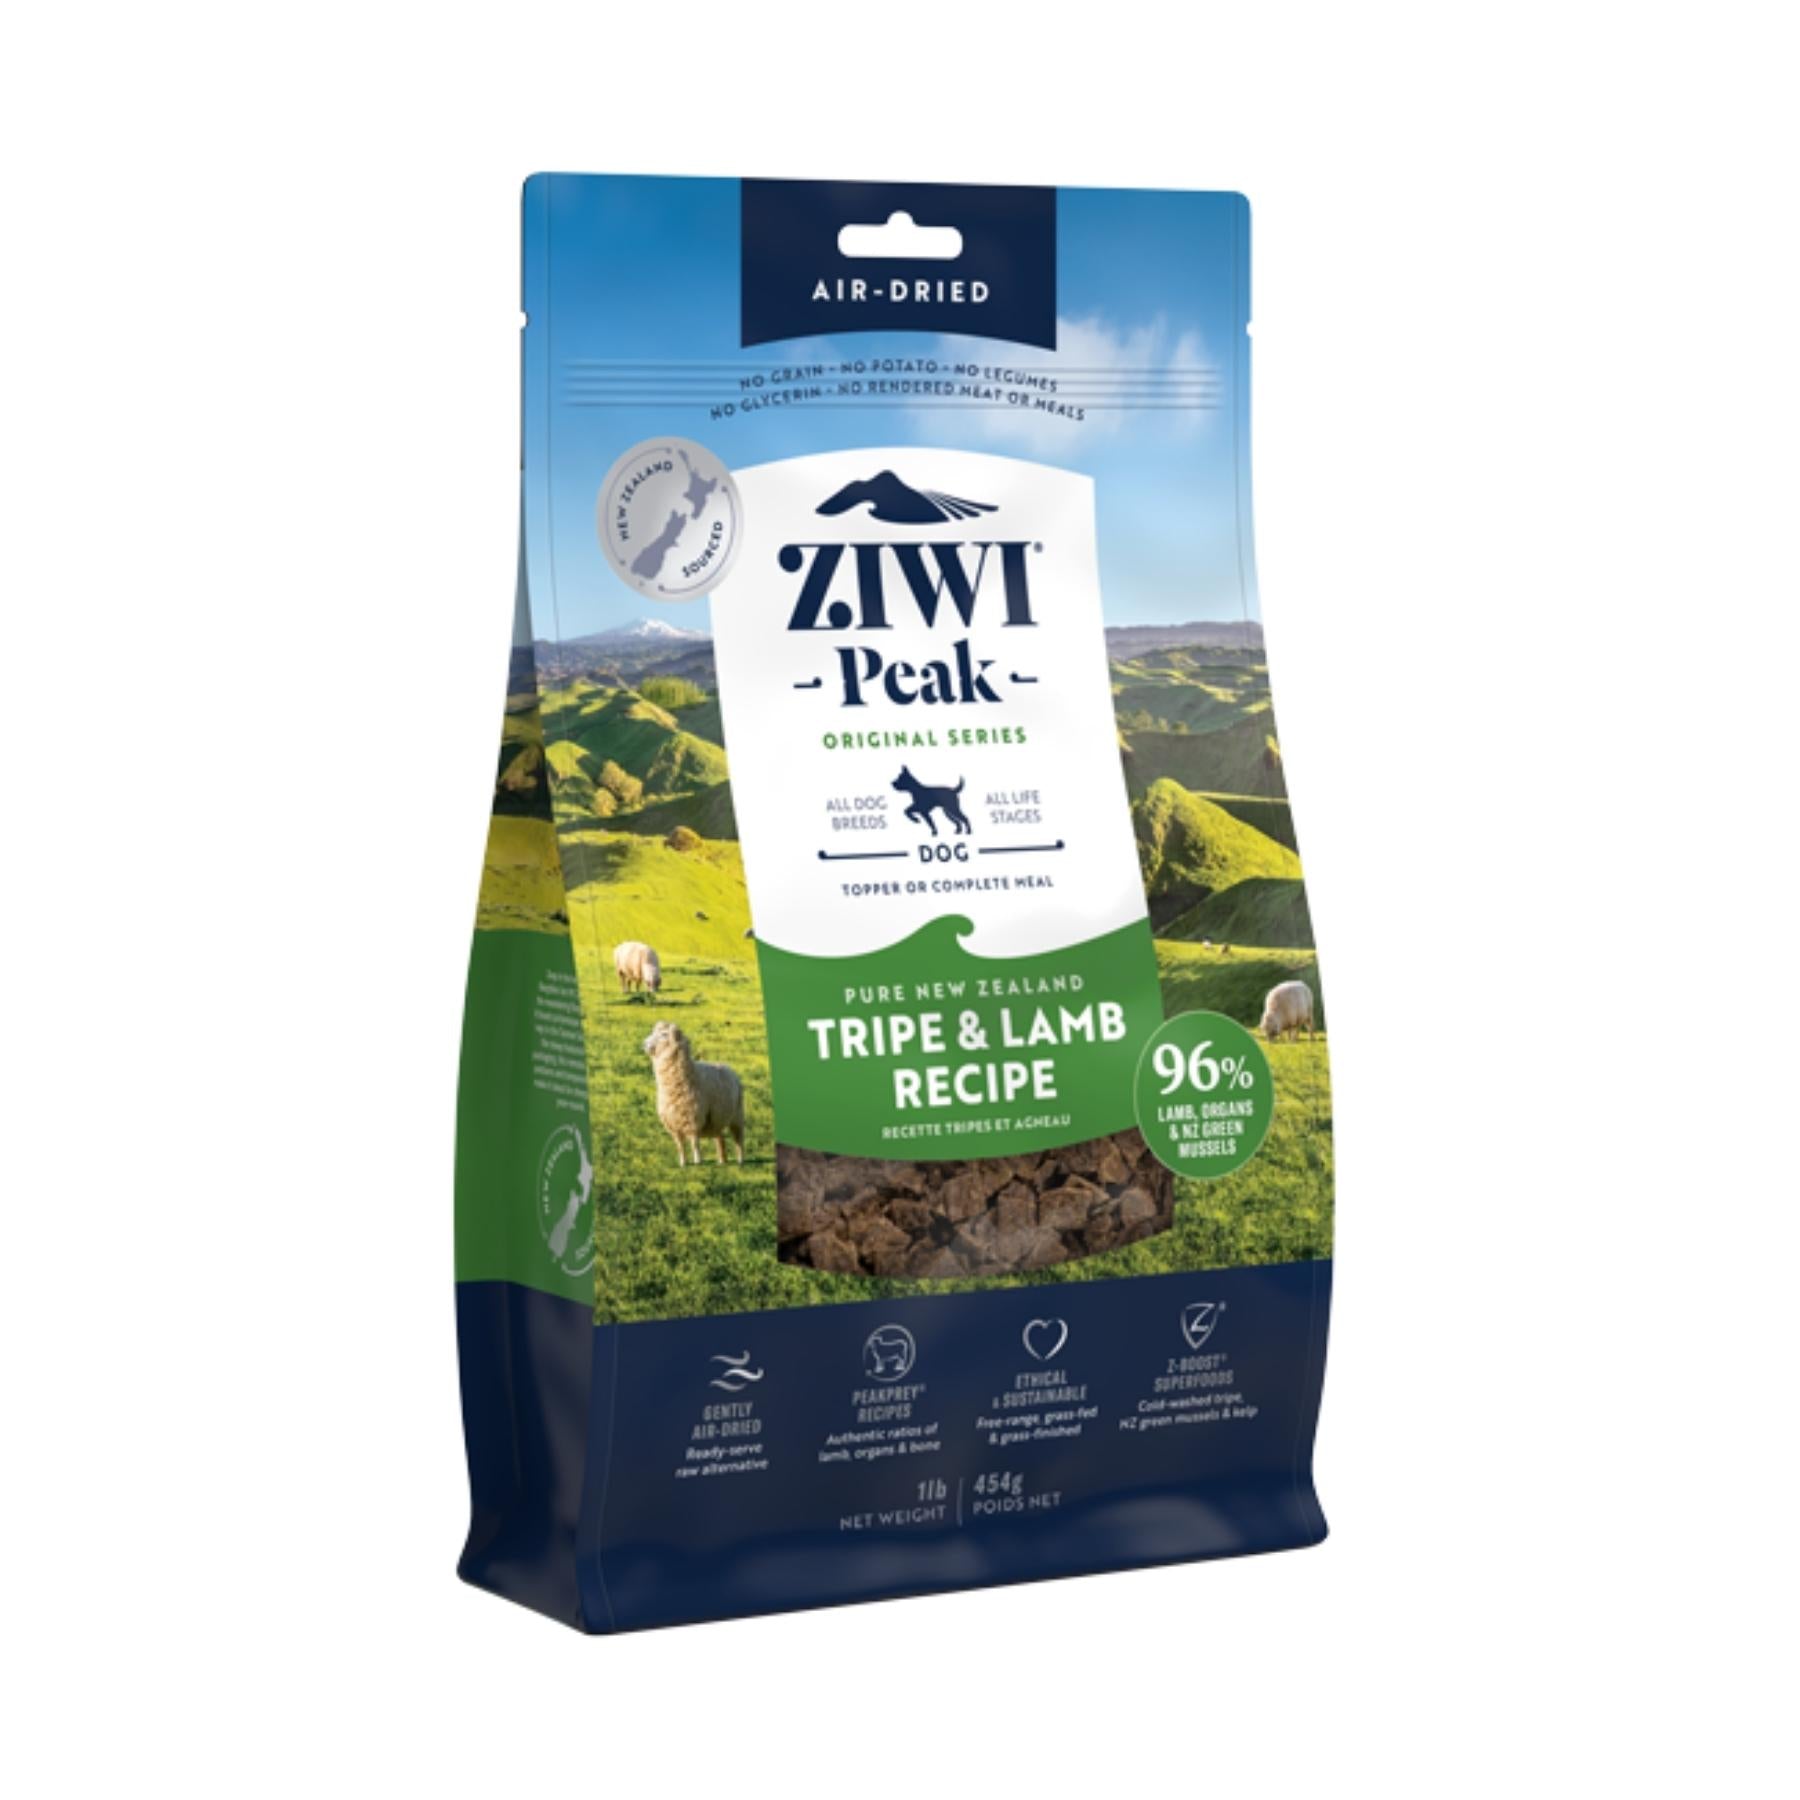 ZIWI Peak Dry Dog Food Tripe & Lamb Recipe 454g.